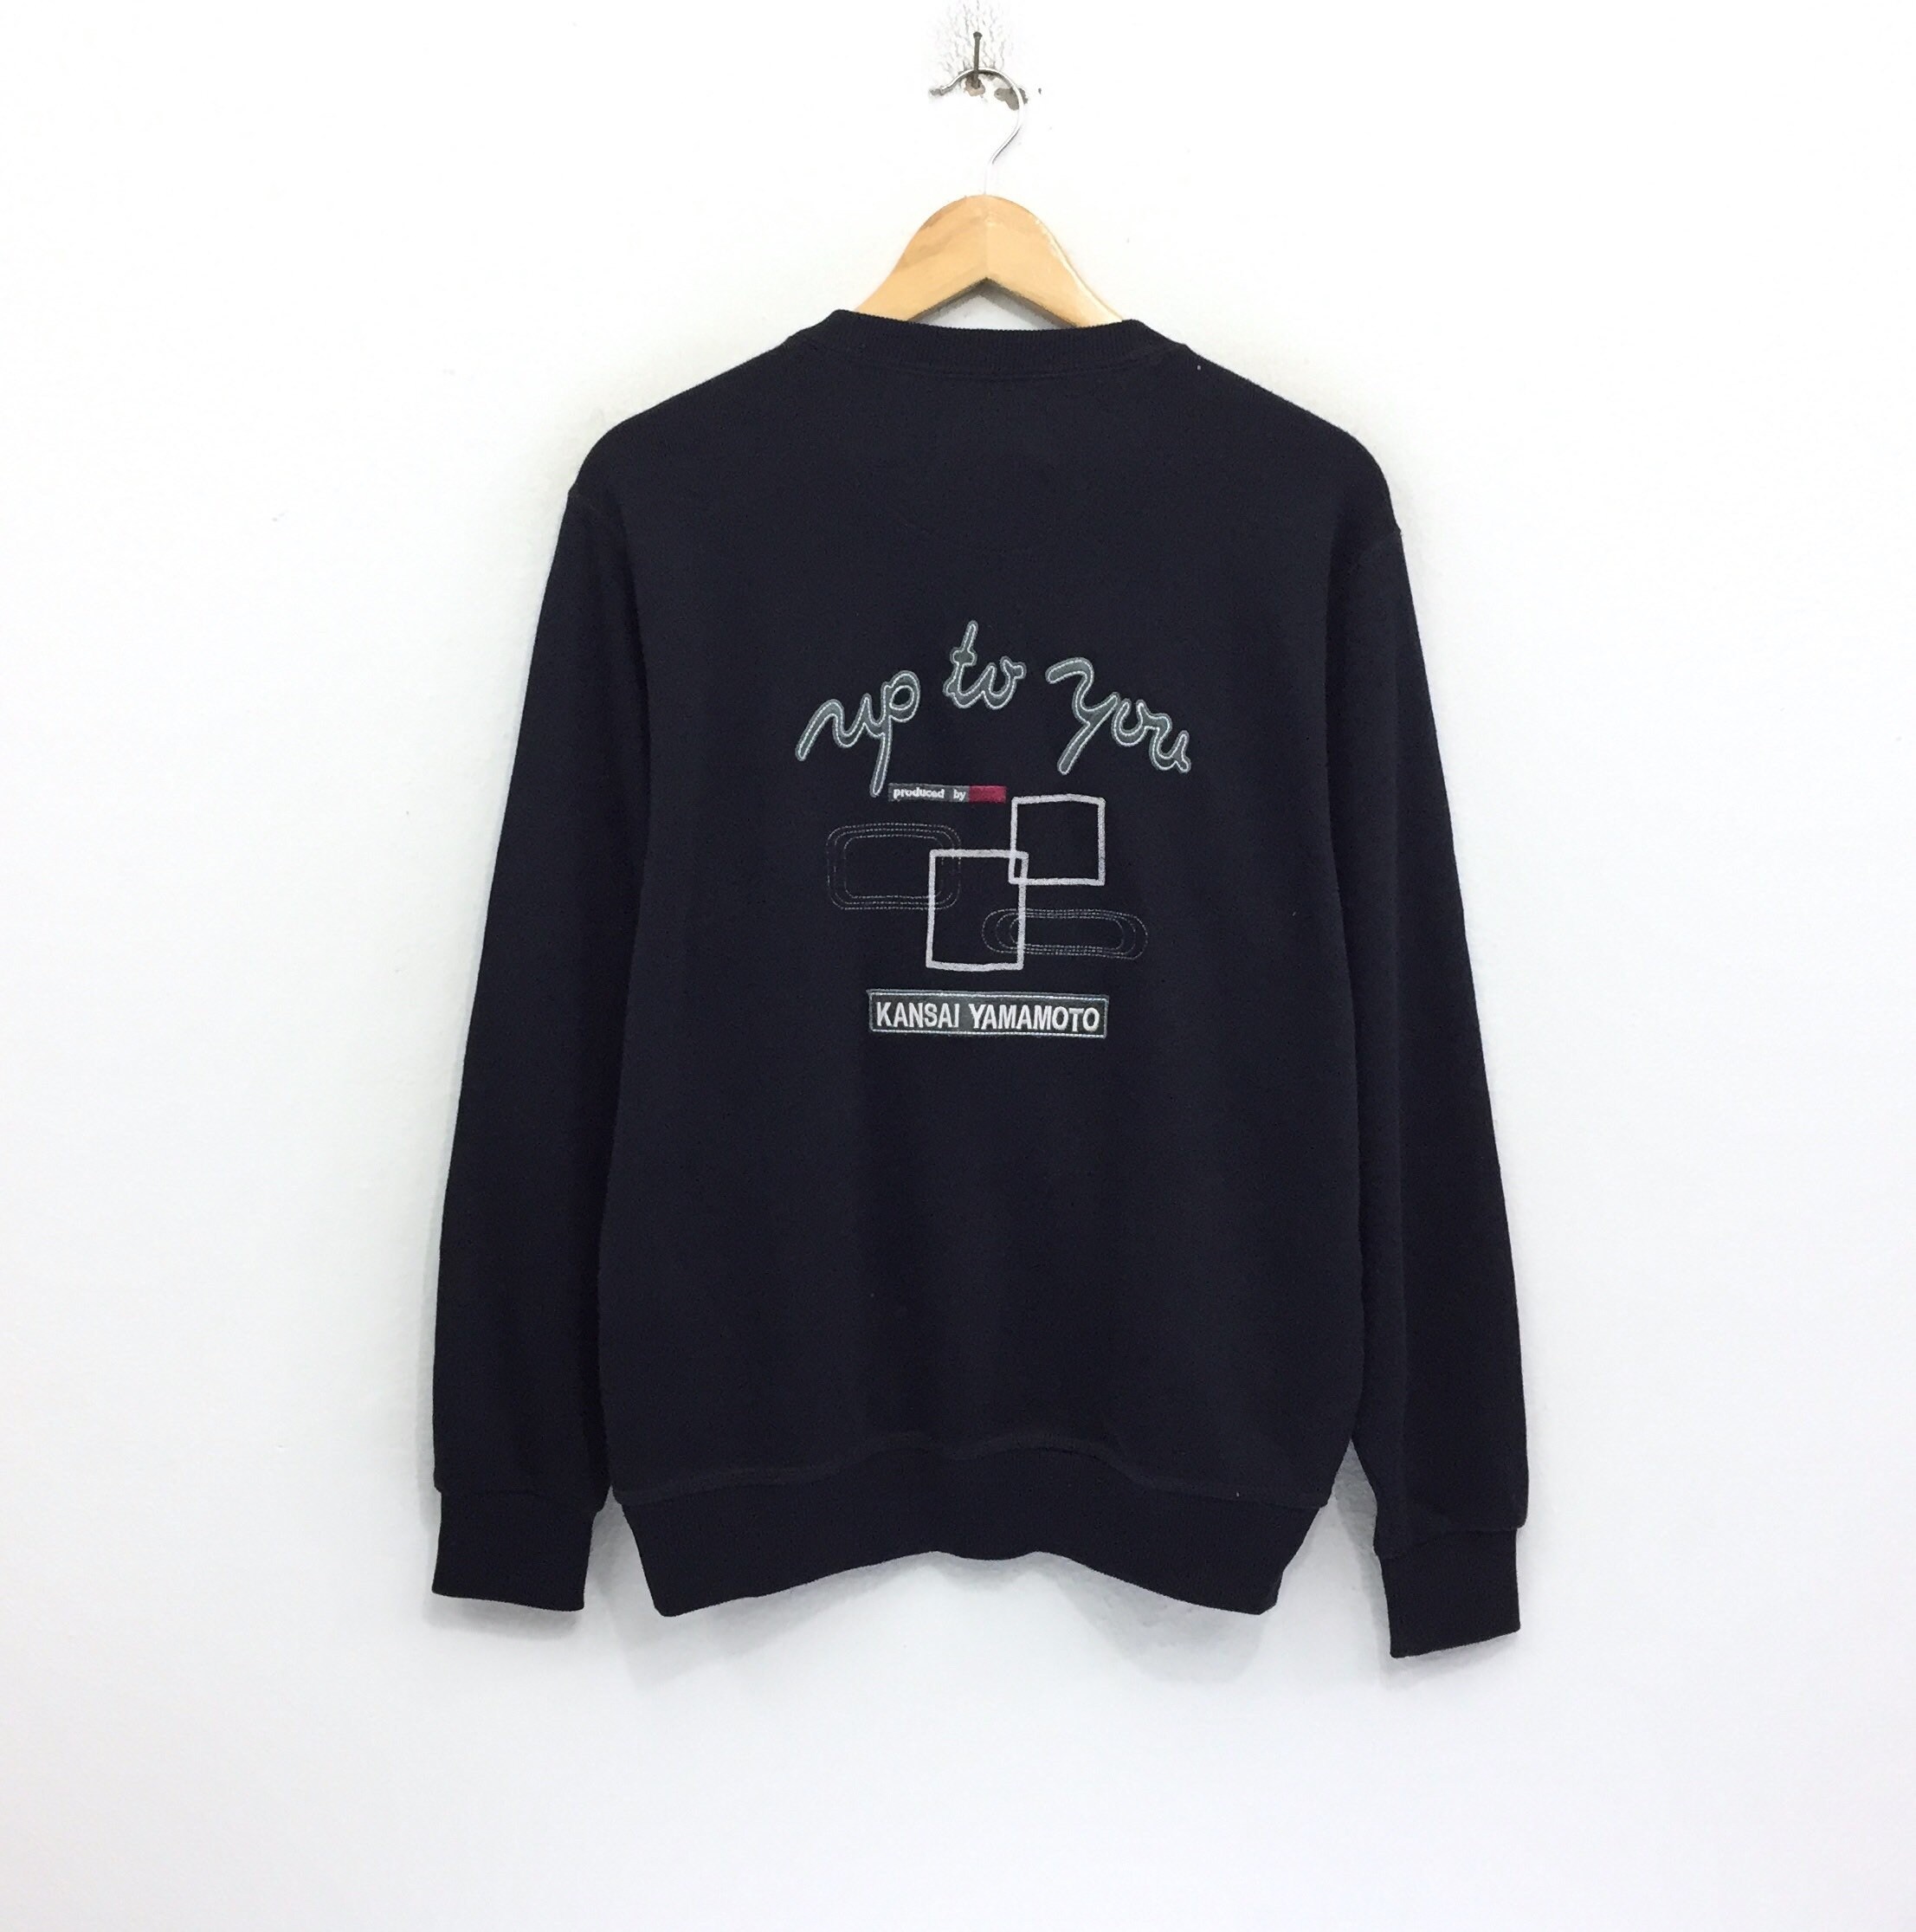 Rare!! Japanese Brand Vintage Kansai Yamamoto Sweatshirt Sissy by Kansai Yamamoto Embroidery Spellout Pullover Jumper